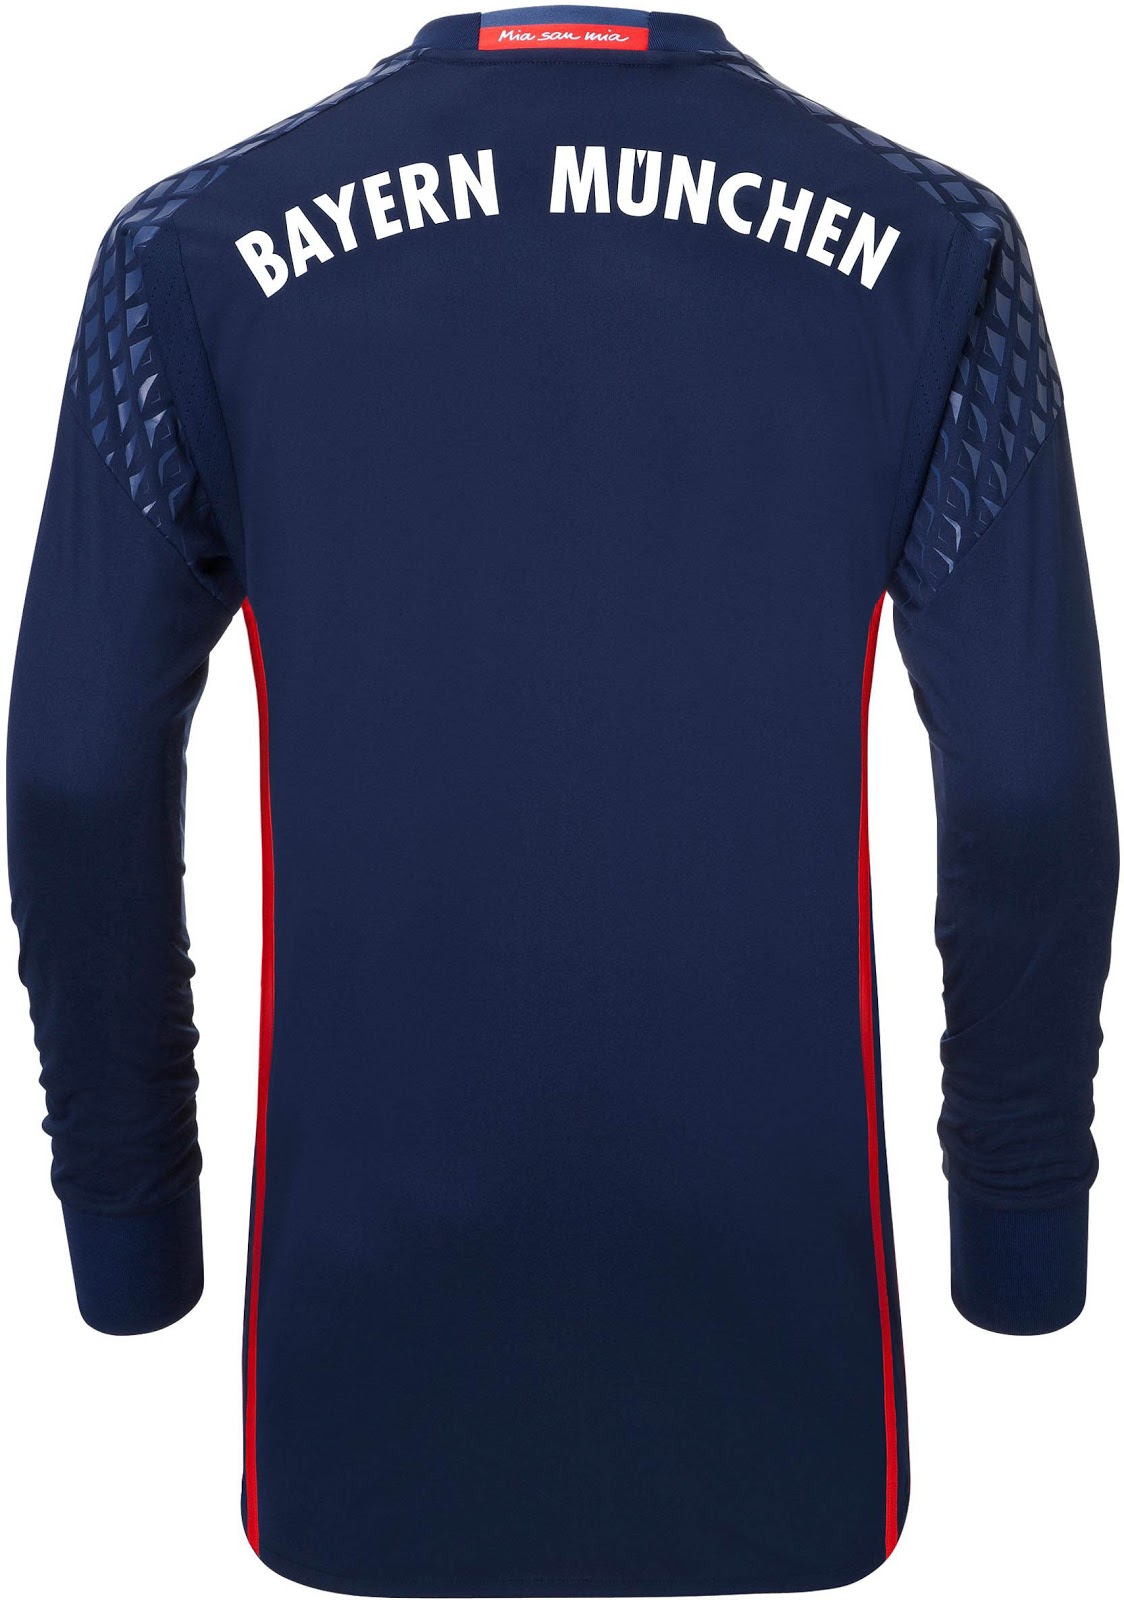 Bayern Munich Kit 1617 Bayern München 16 17 Goalkeeper Kit Released